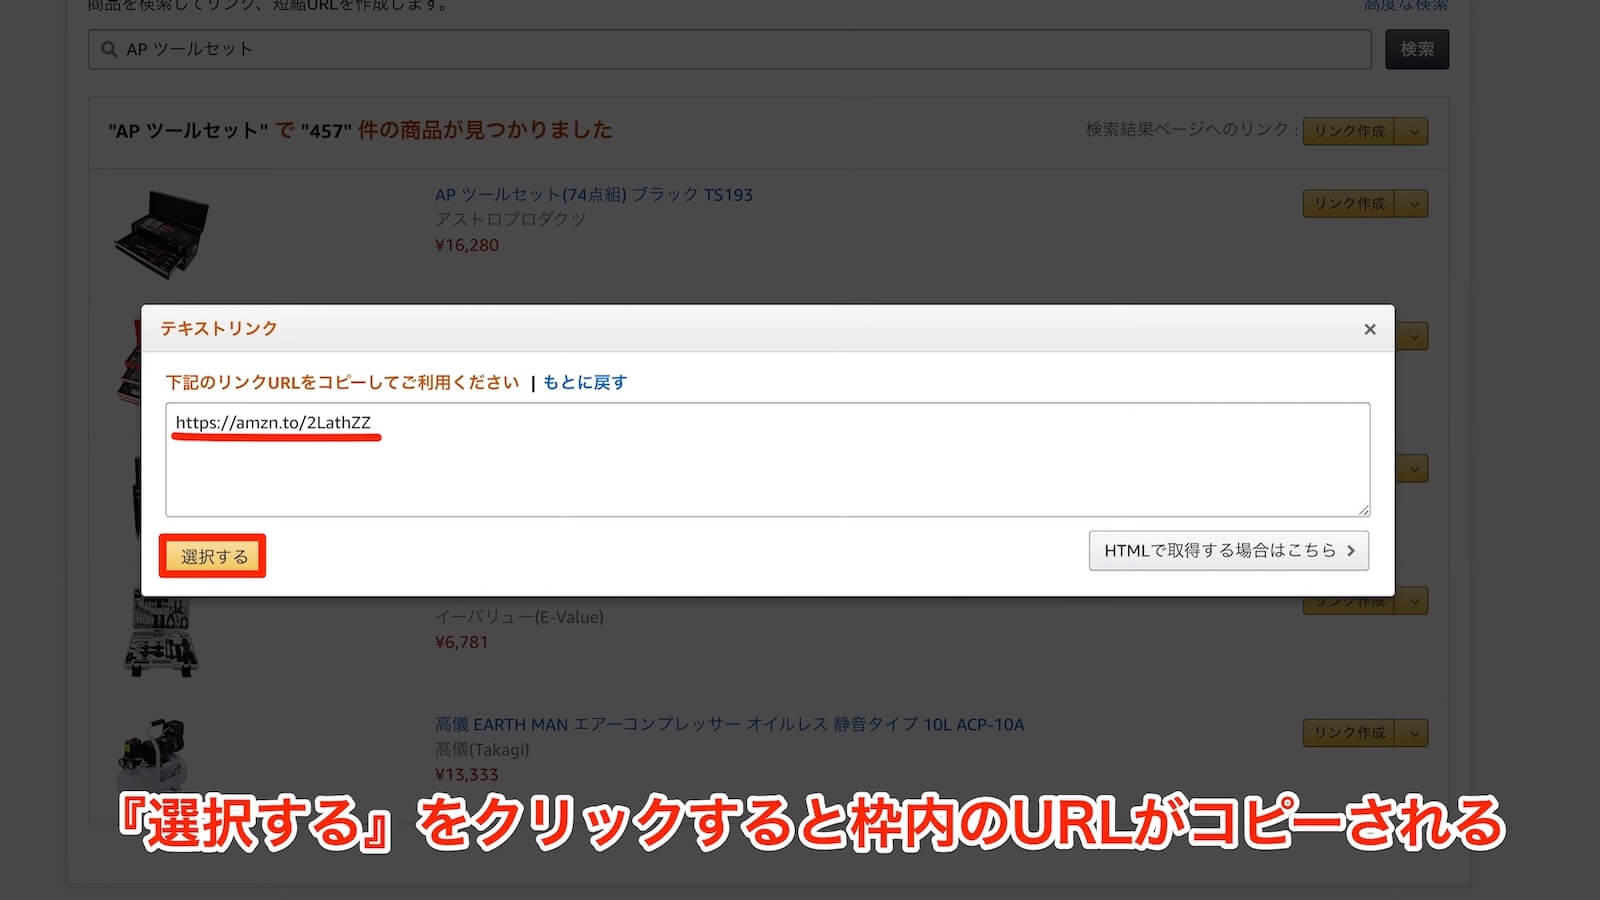 Amazon Associate product shortened URL creation screen capture